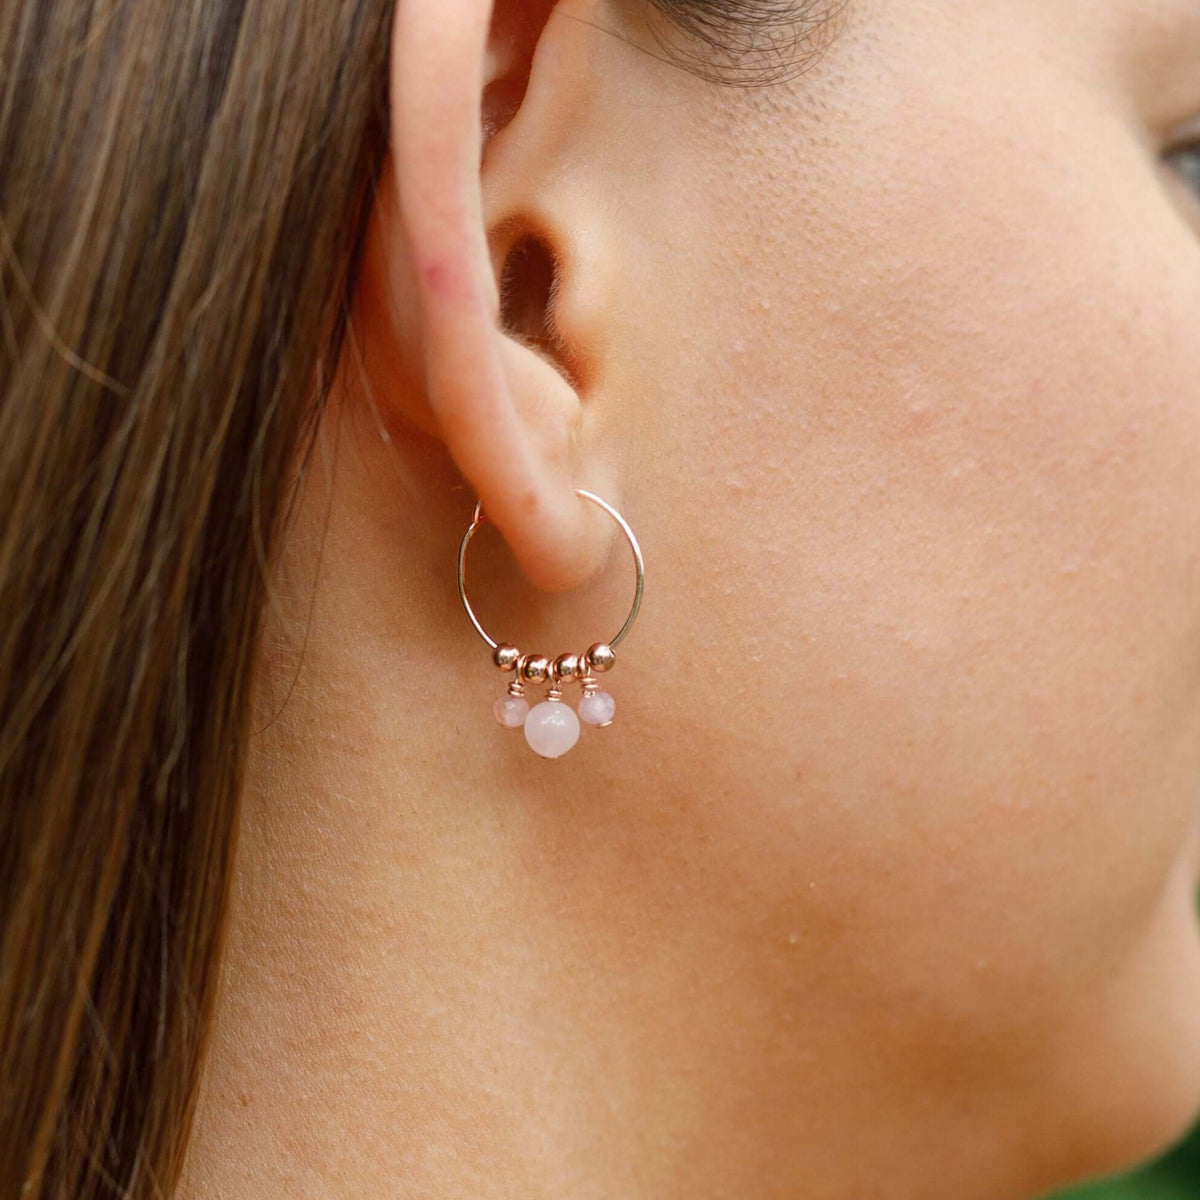 Hoop Earrings - Rose Quartz - 14K Rose Gold Fill - Luna Tide Handmade Jewellery